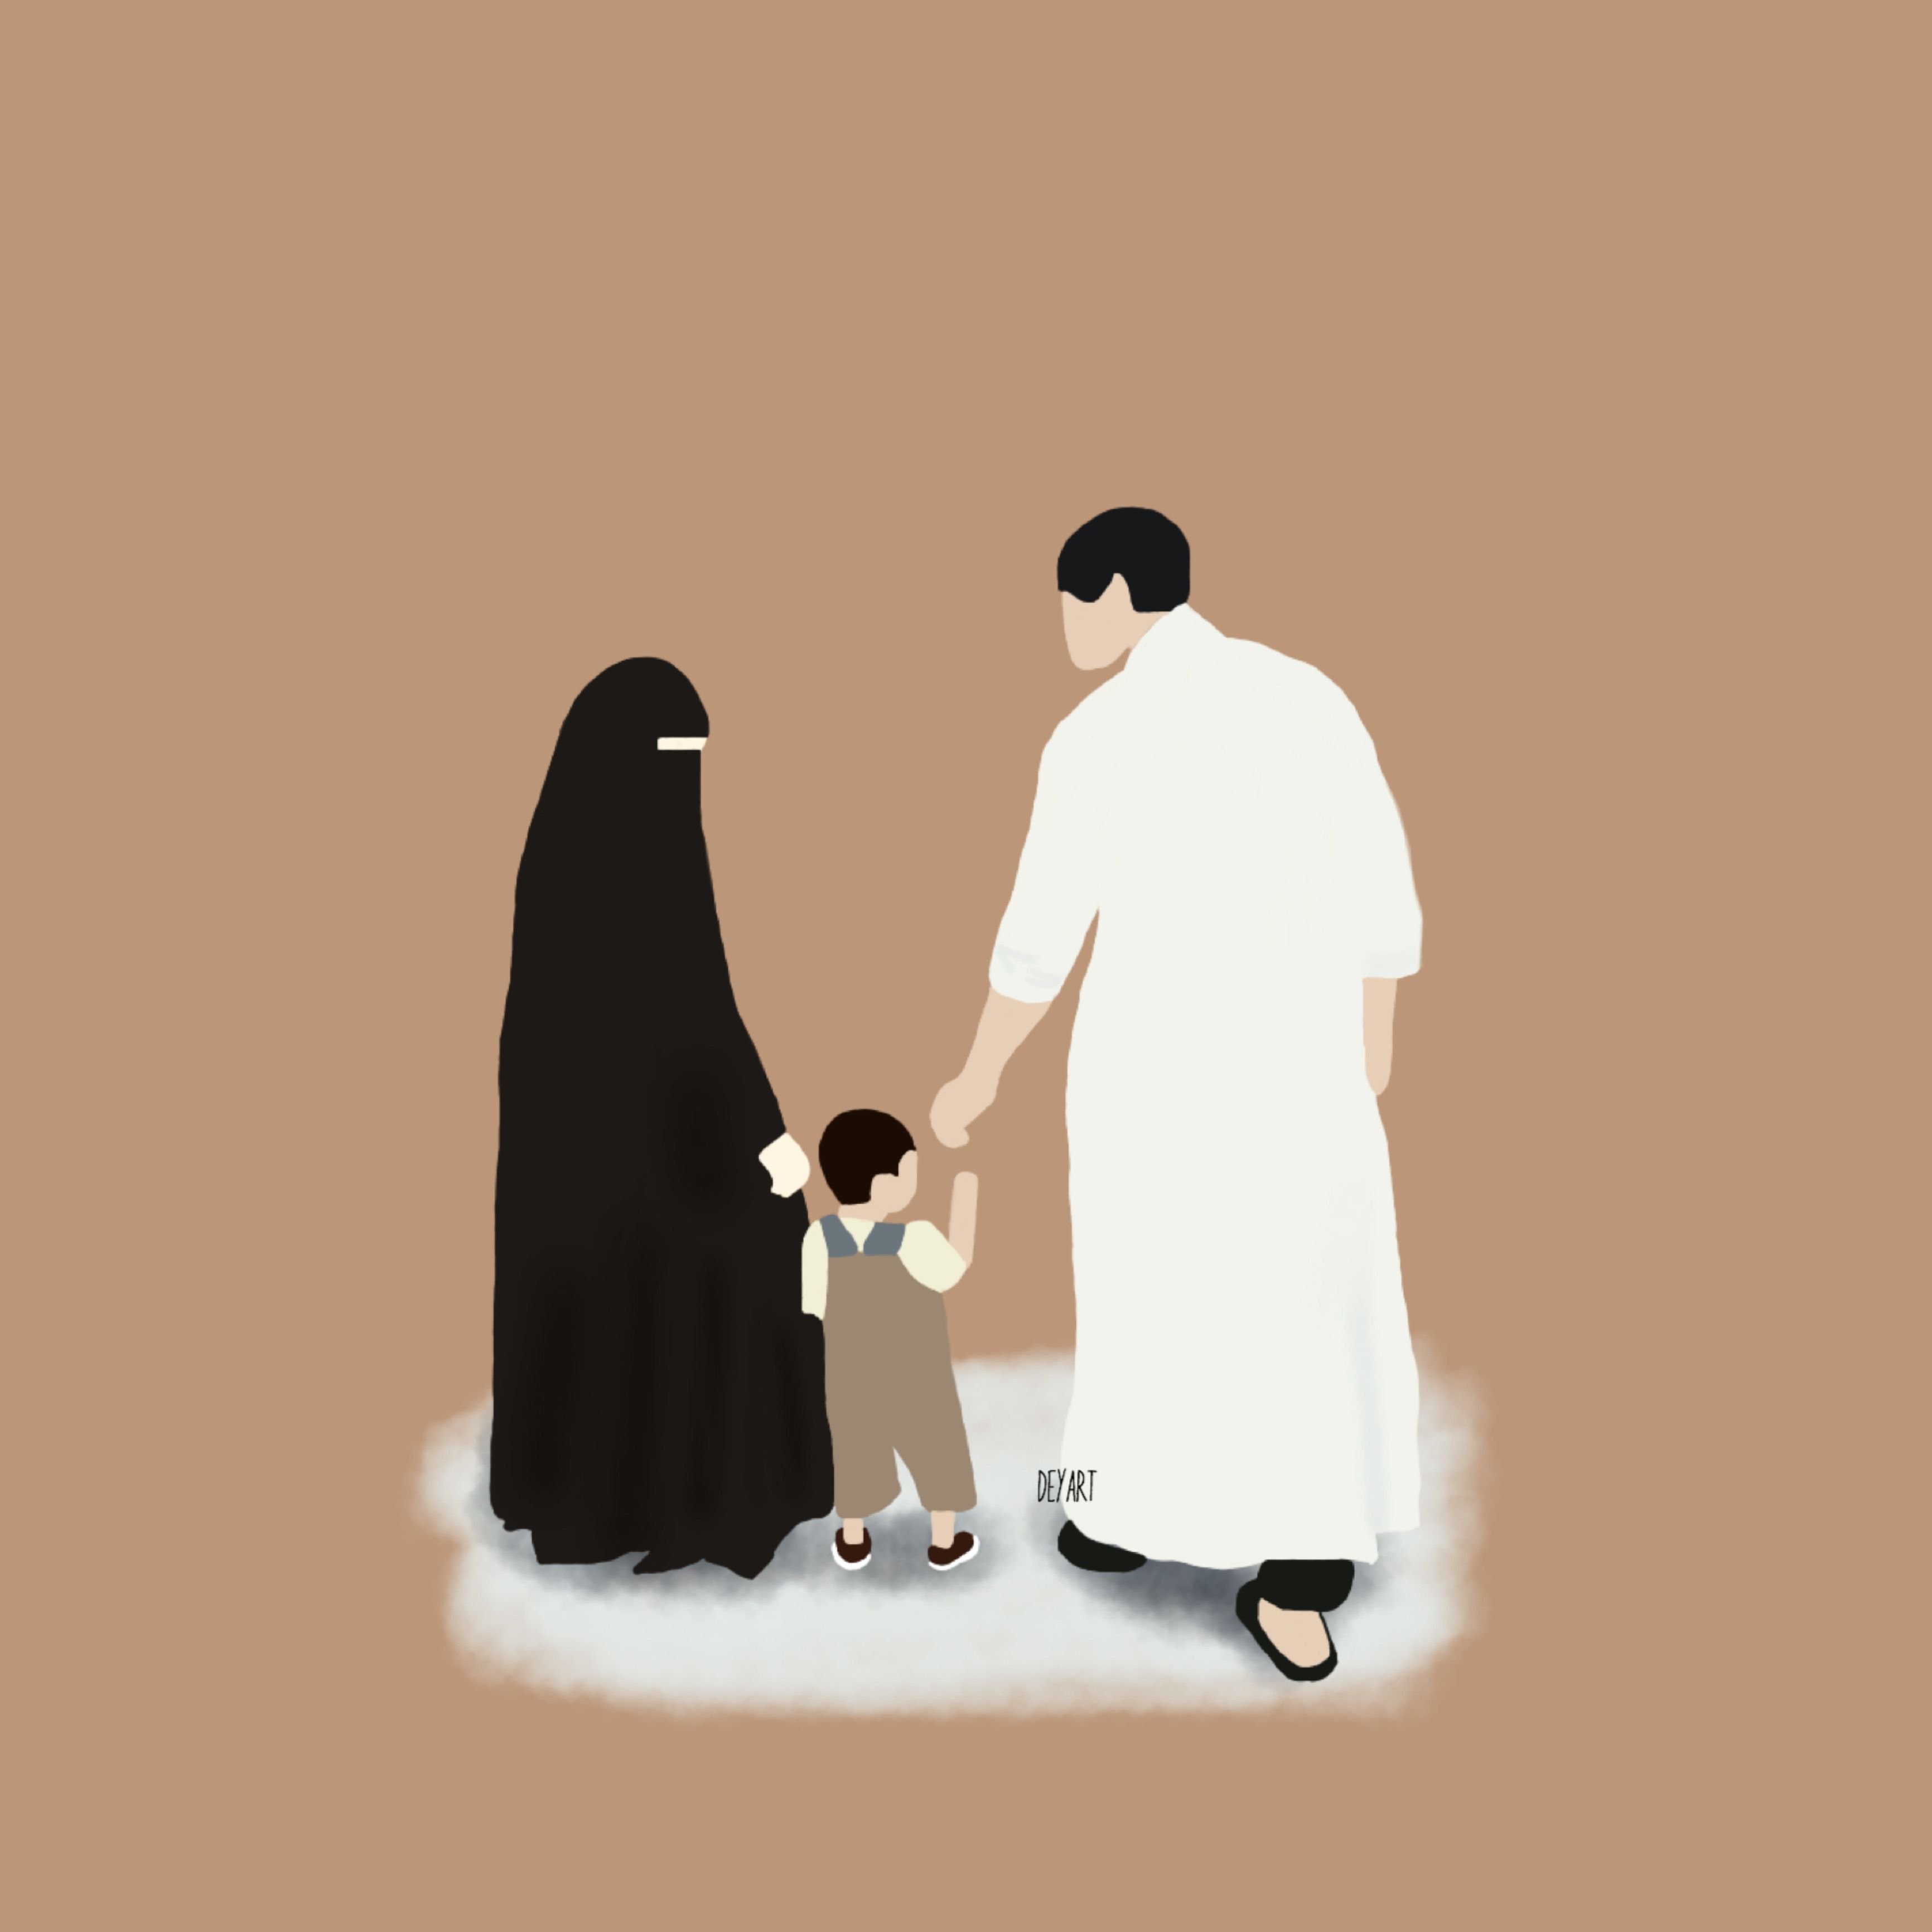 Дети мужа в исламе. Мусульманская семья. Мусульманская пара с ребенком. Исламские рисунки.